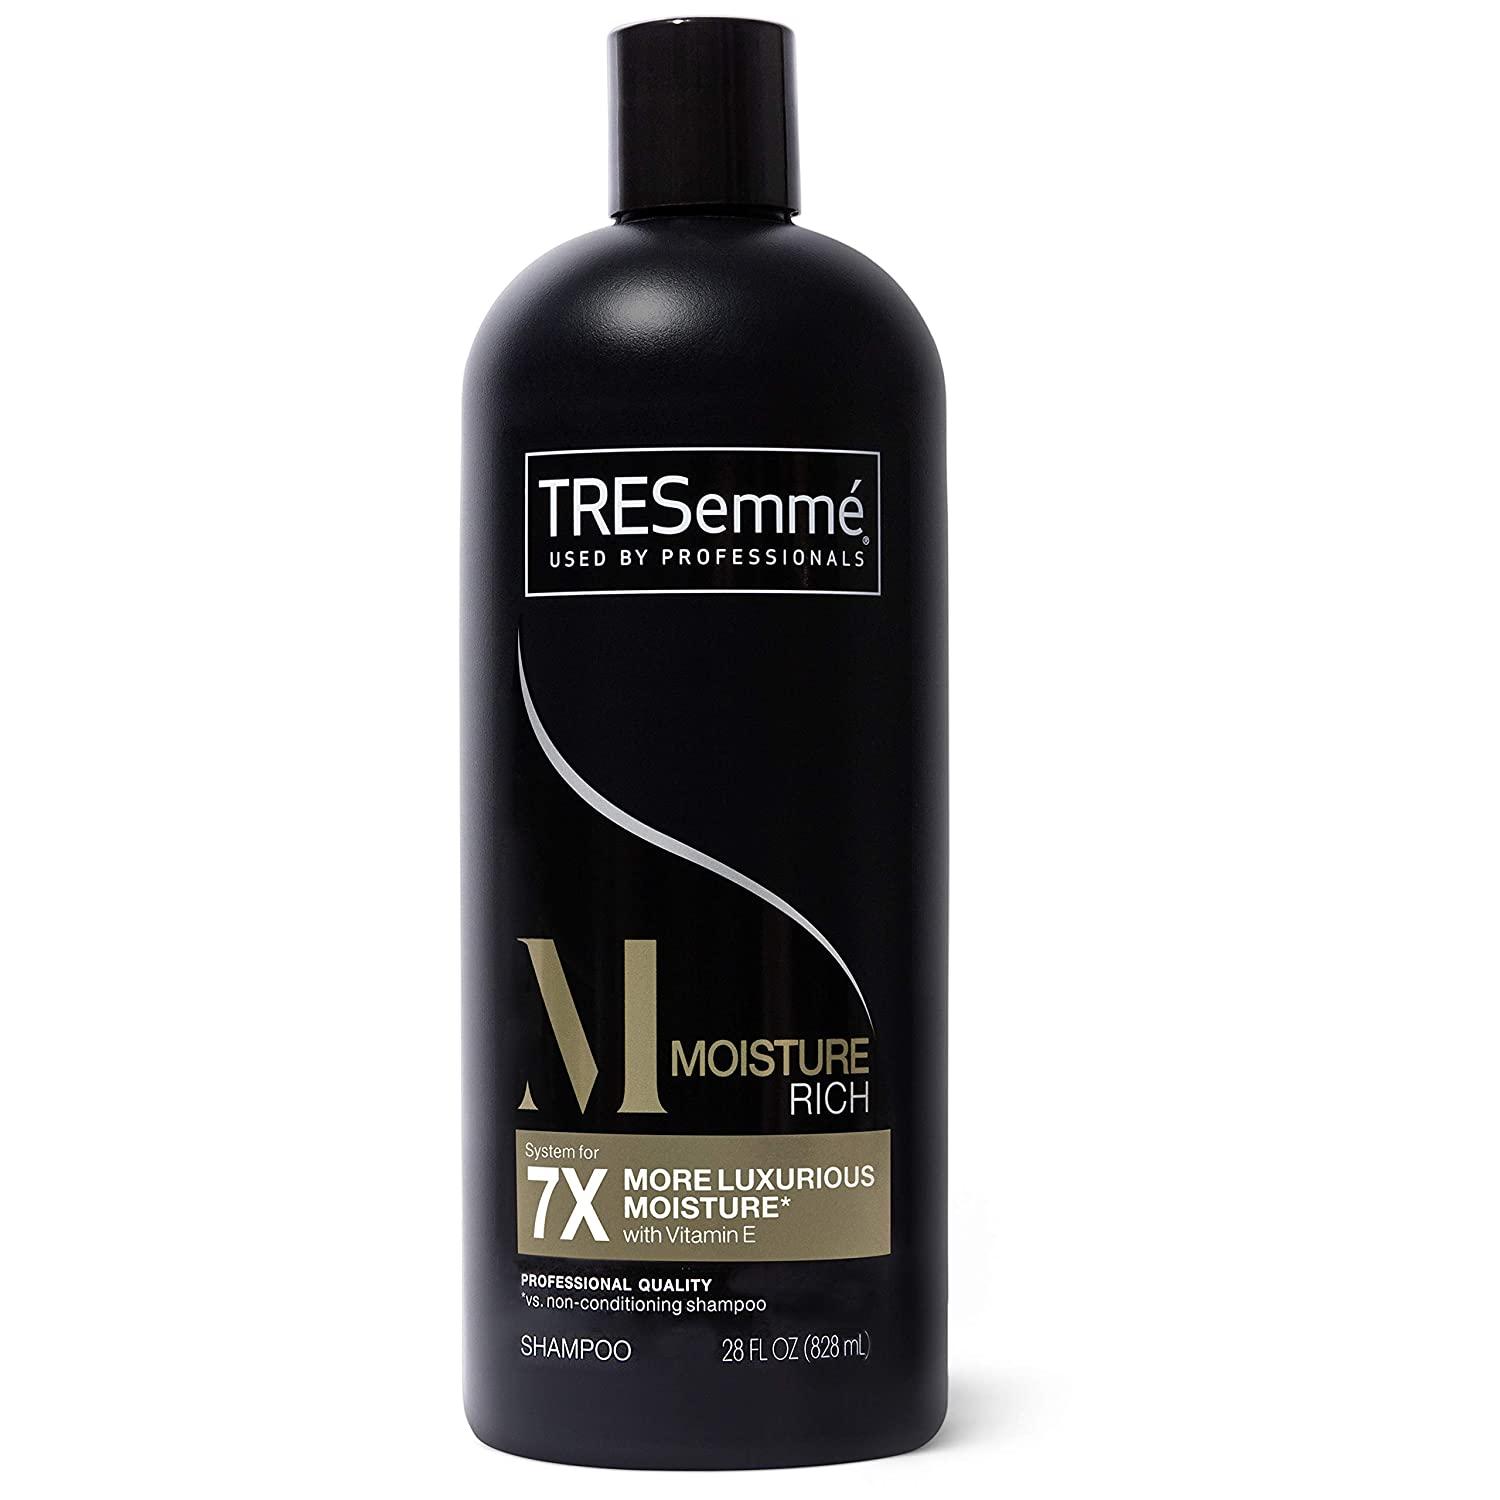 TRESemme Moisturizing Shampoo with Vitamin E for $2.56 Shipped